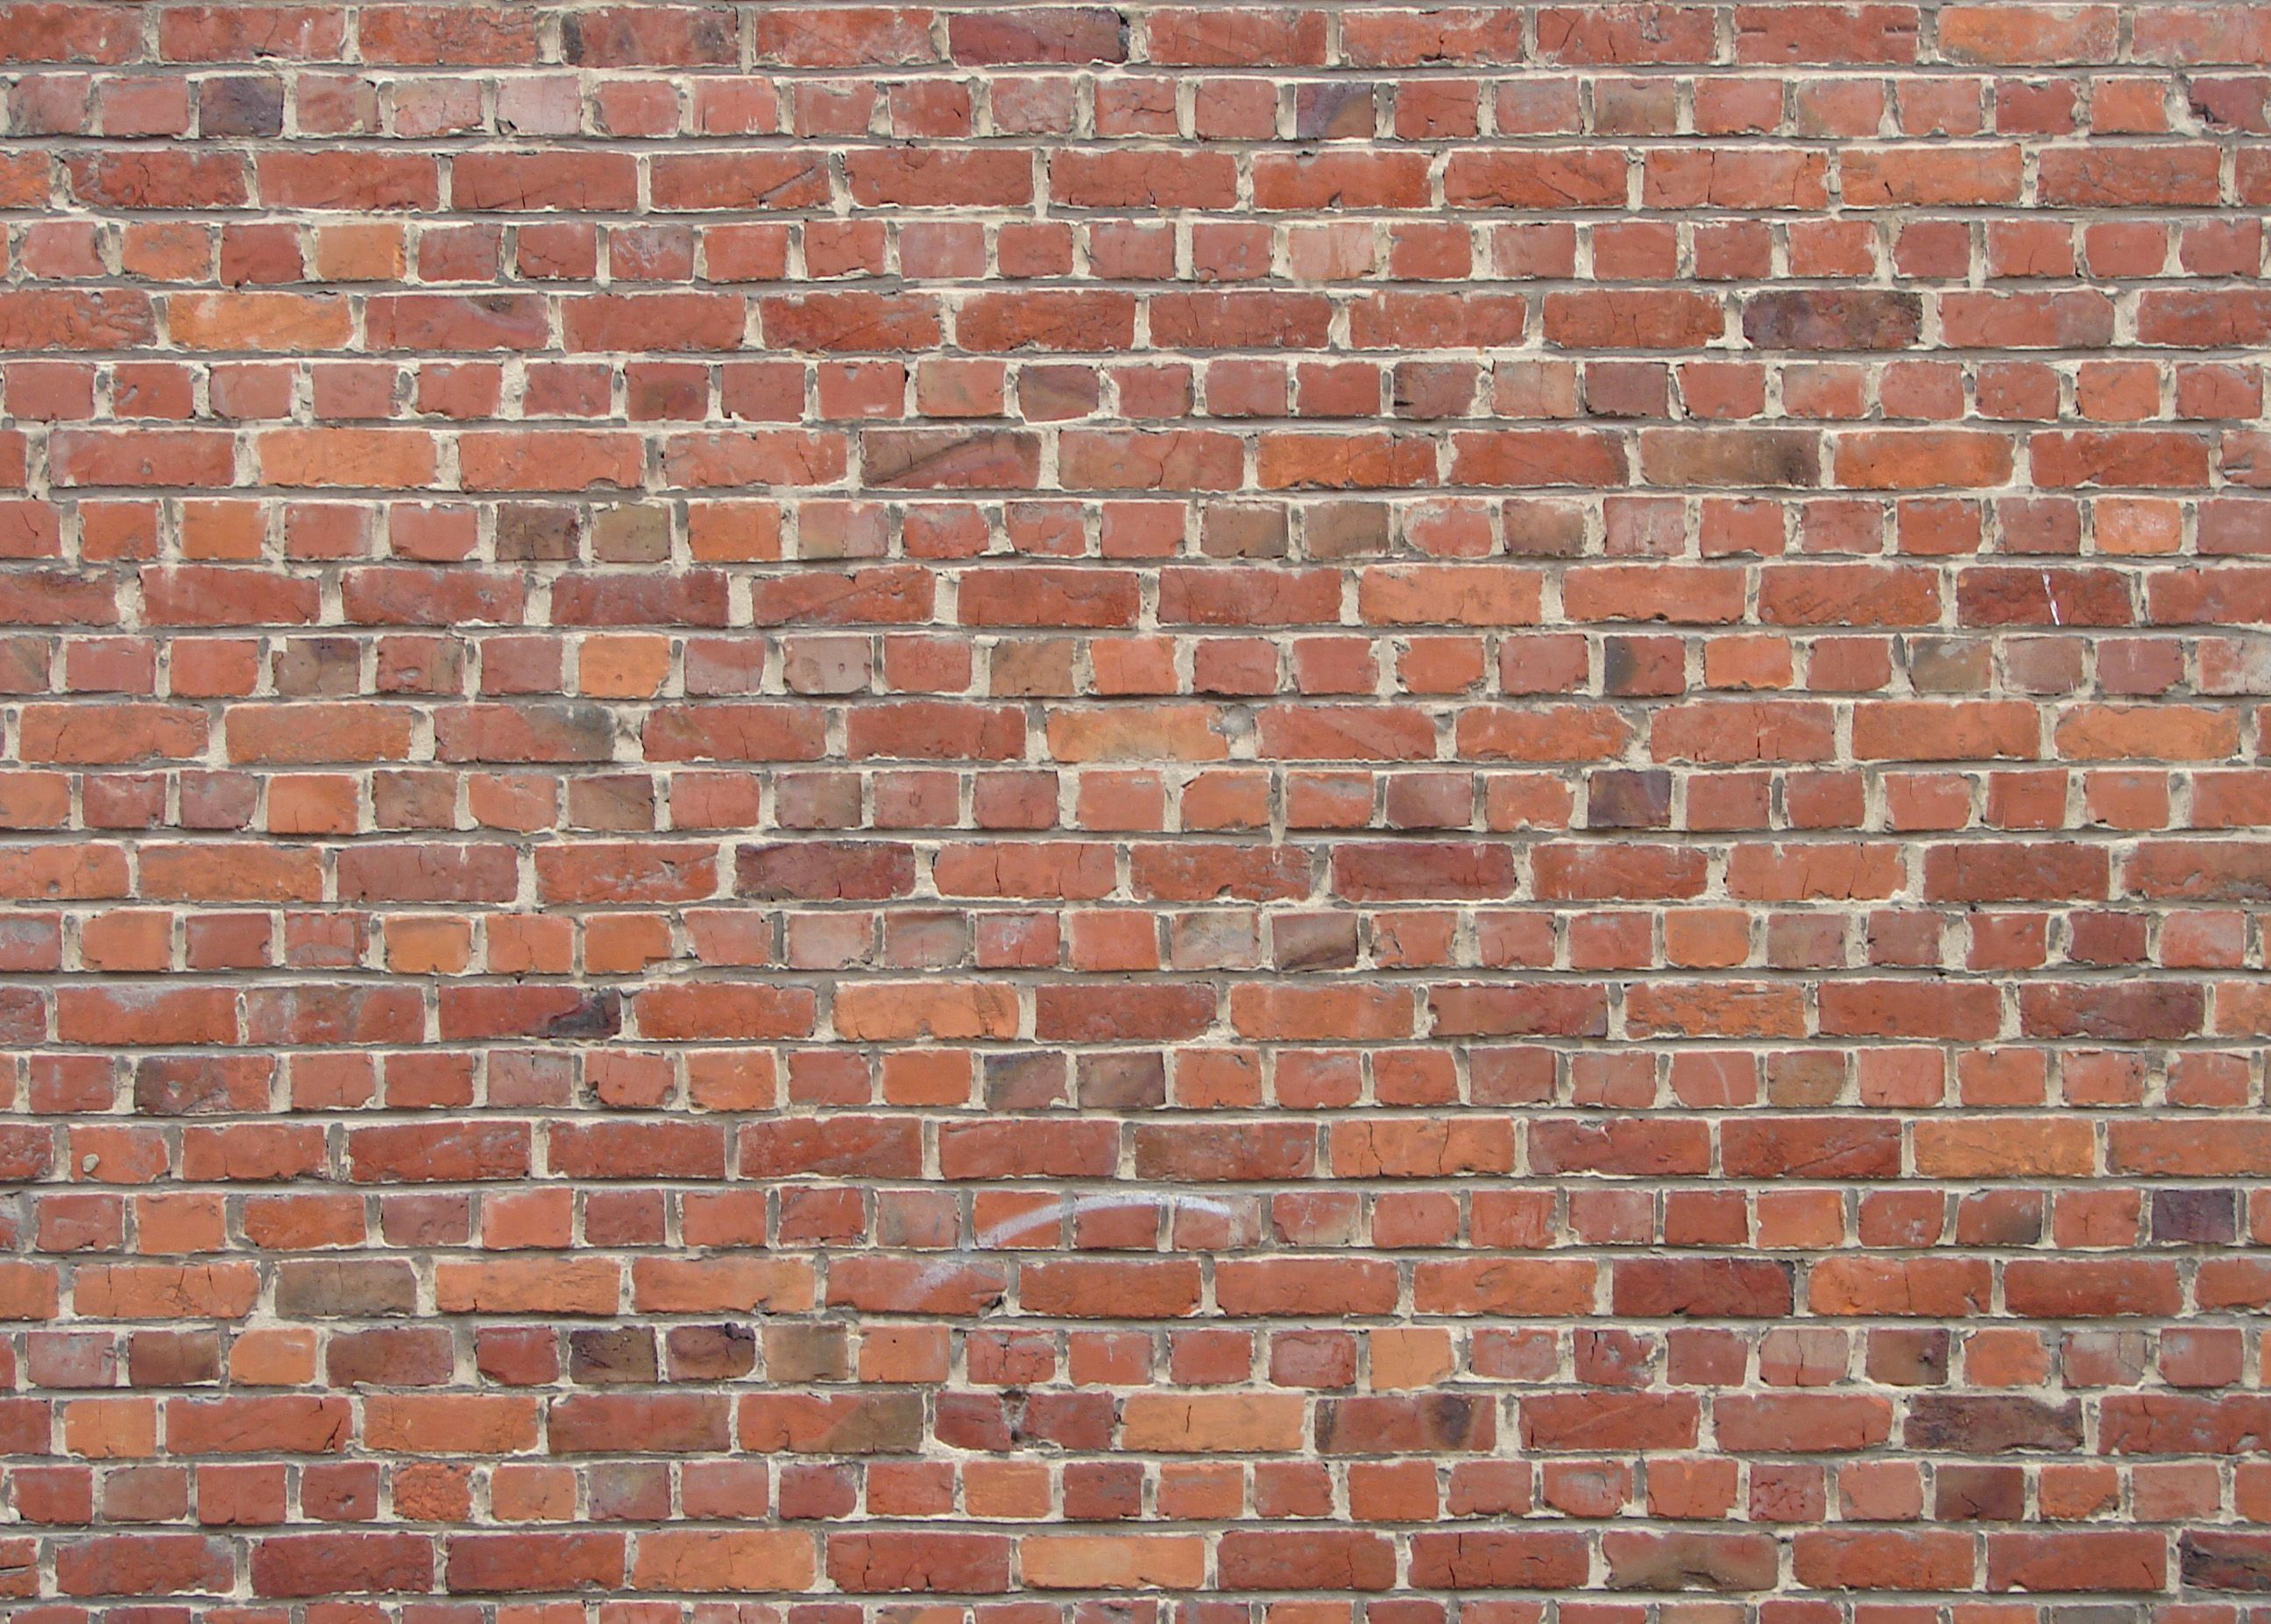 brick wall texture - Google Search | Fences Project | Pinterest ...